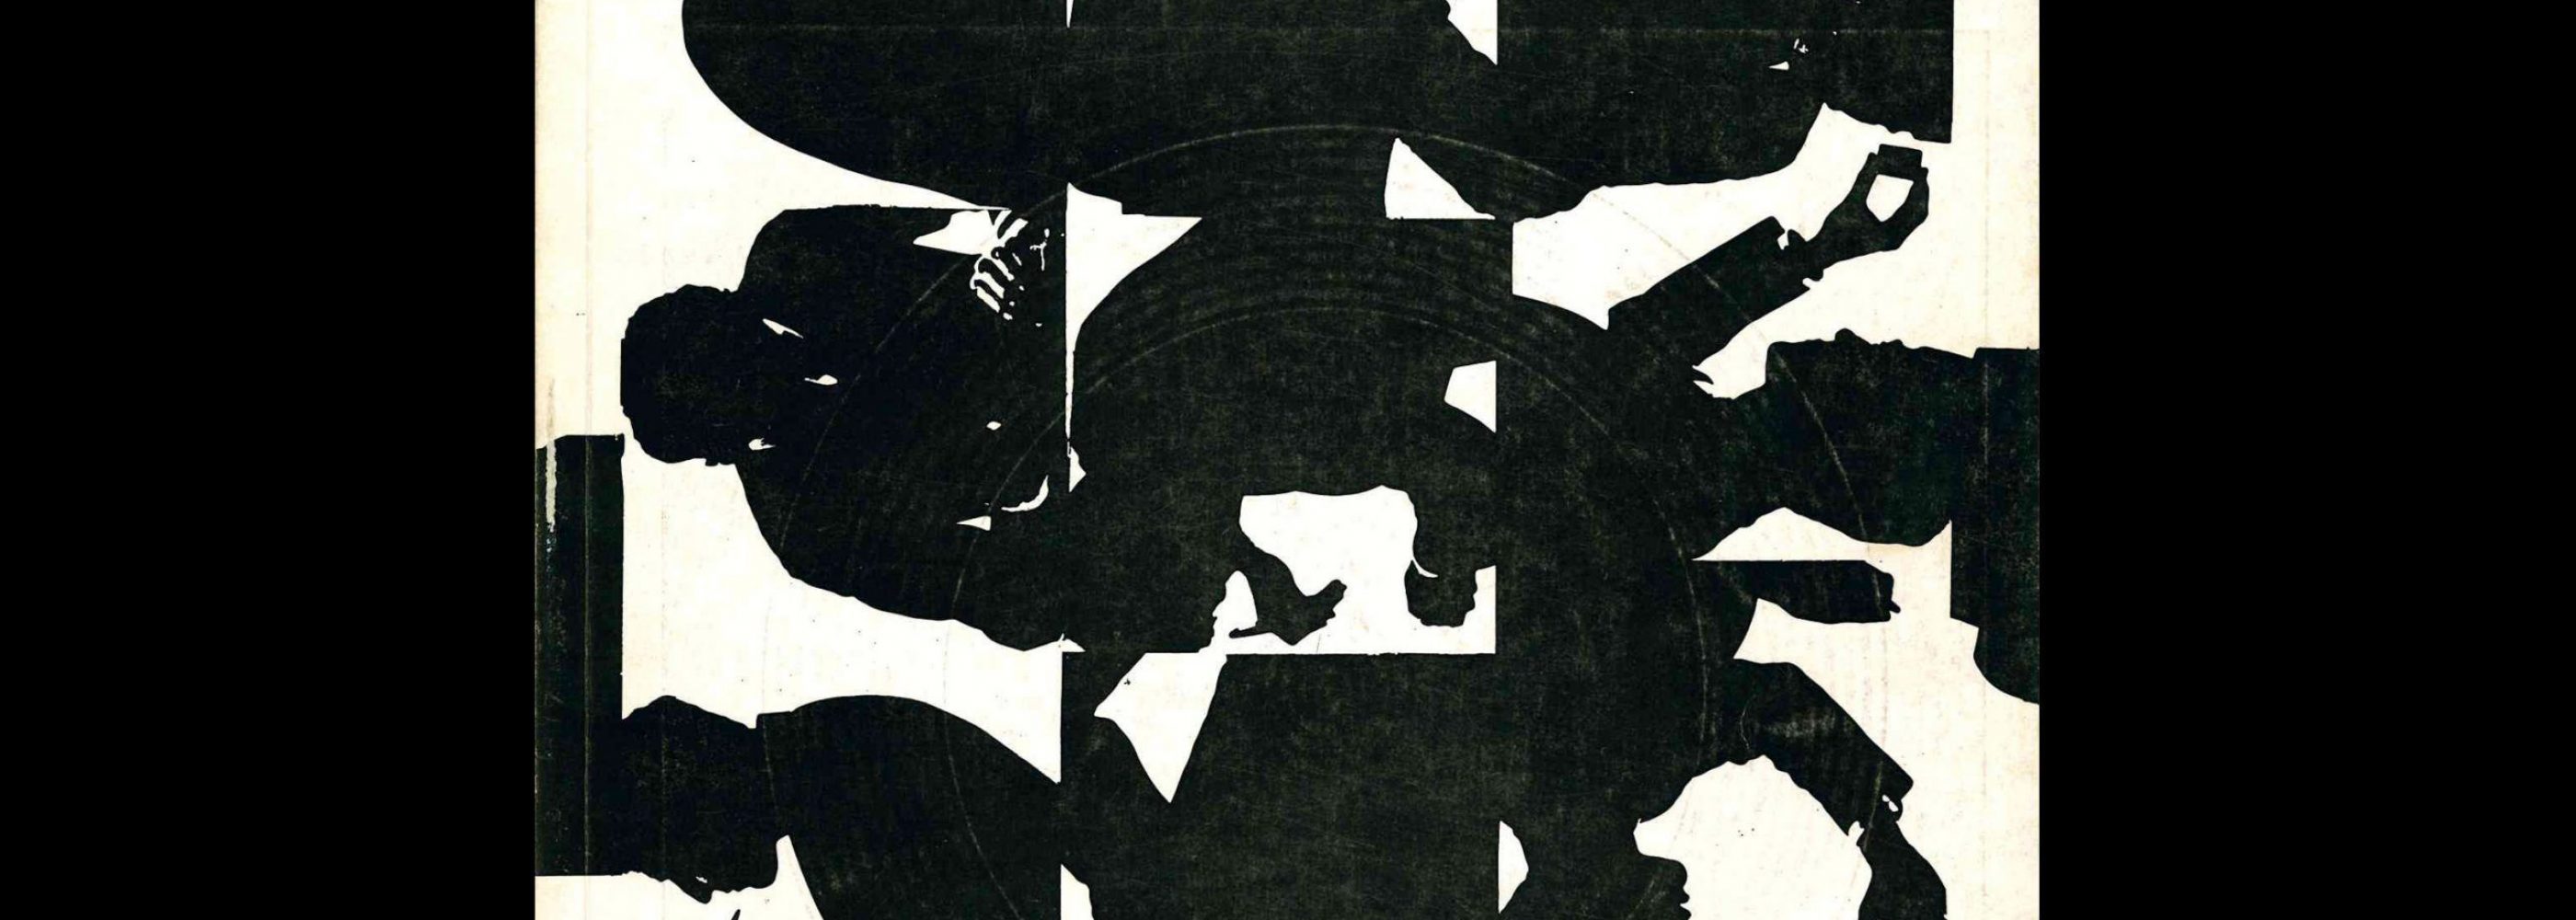 Gebrauchsgraphik, 9, 1966. Cover design by Alain Pontecorvo